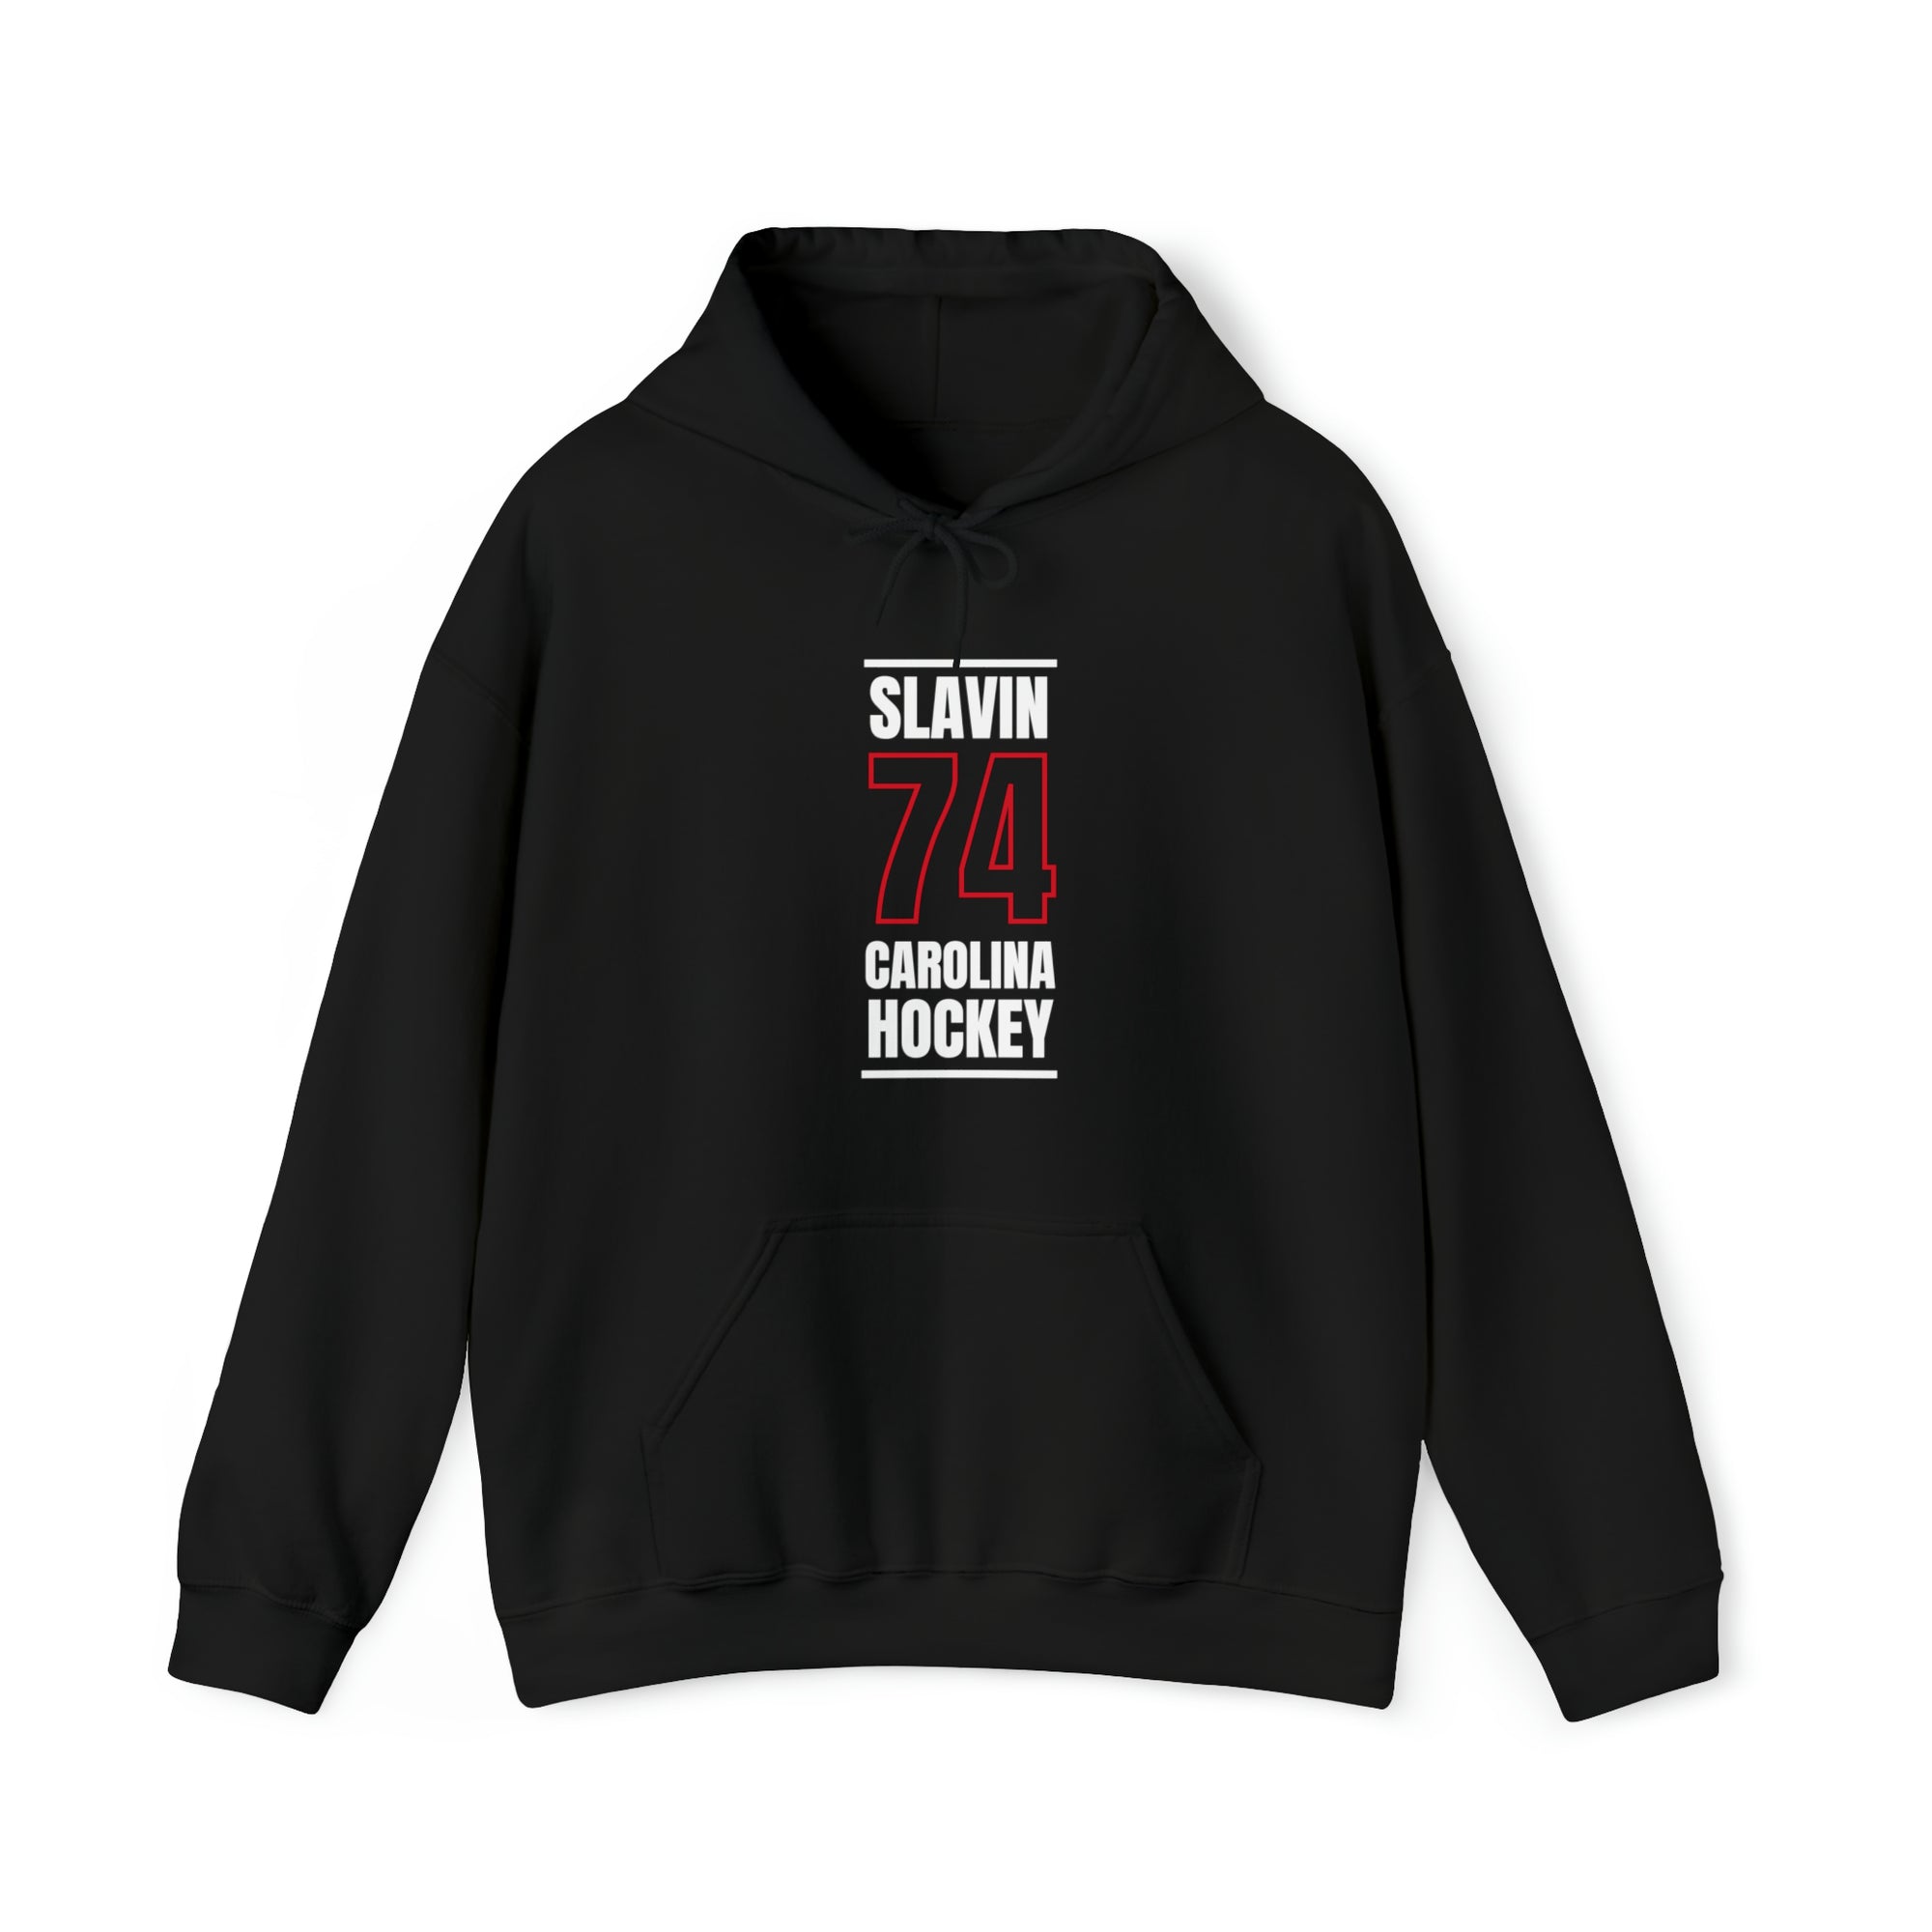 Slavin 74 Carolina Hockey Black Vertical Design Unisex Hooded Sweatshirt